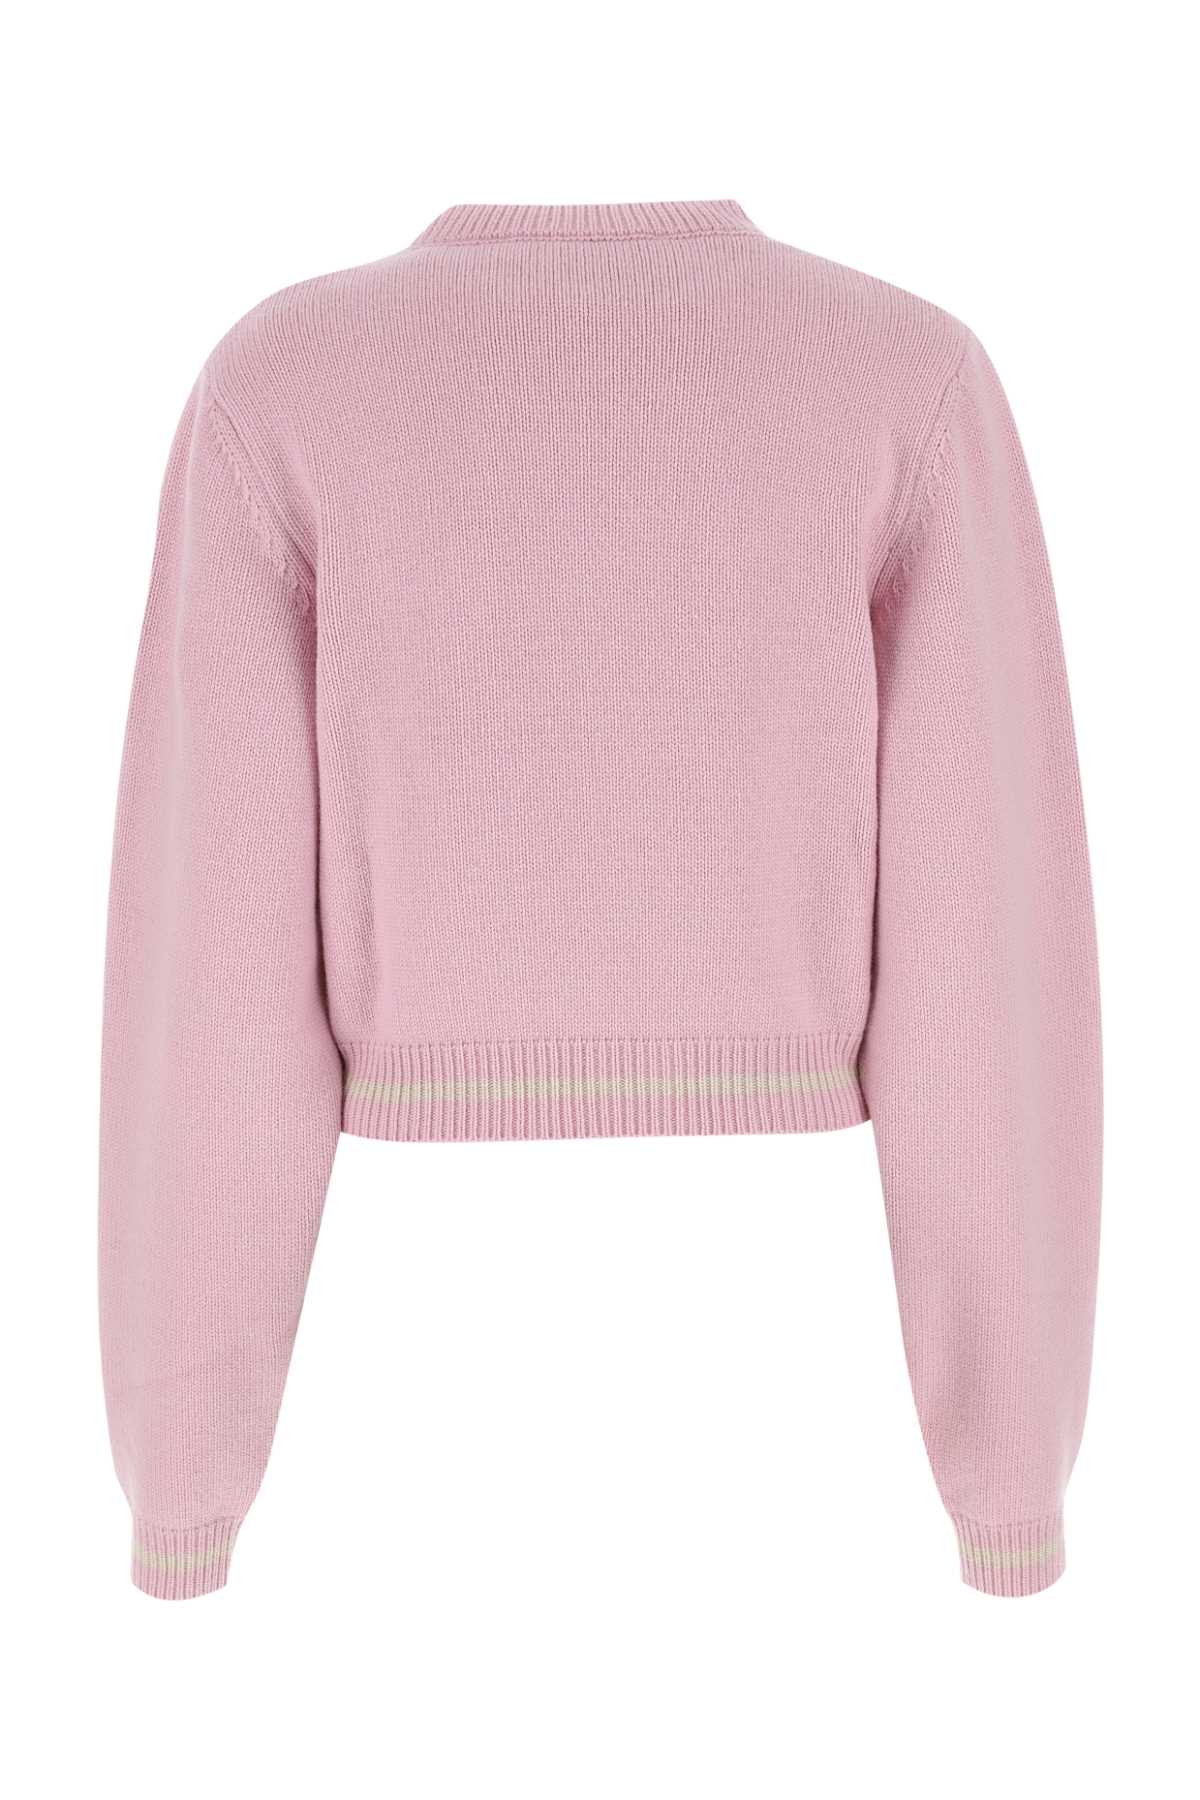 Marni Pink Wool Jumper In 00c18